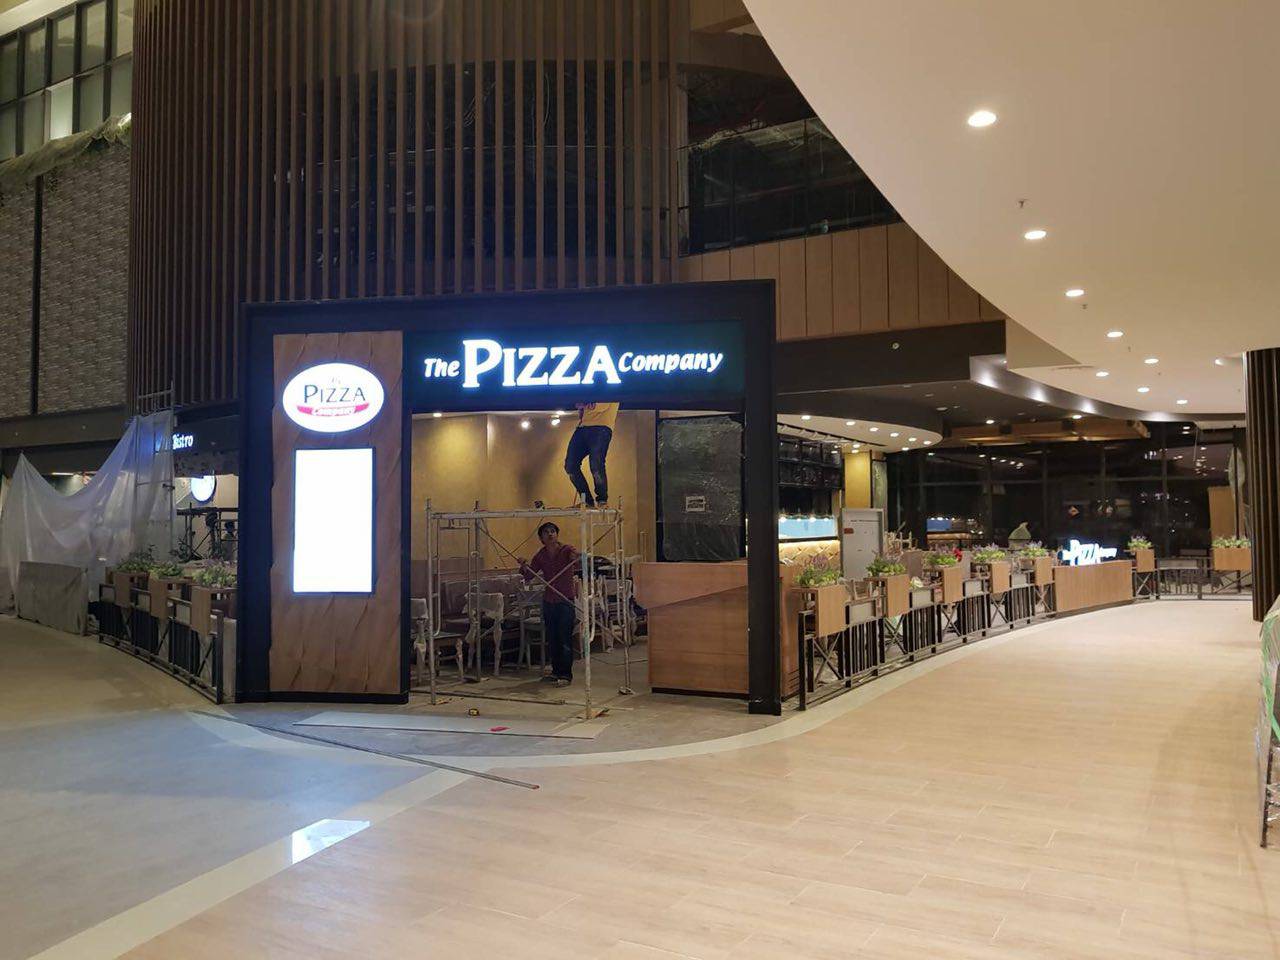 The Pizza Company នឹងបើកដំនើរការឆាប់ៗនេះហើយនៅ AEON សែនសុខ